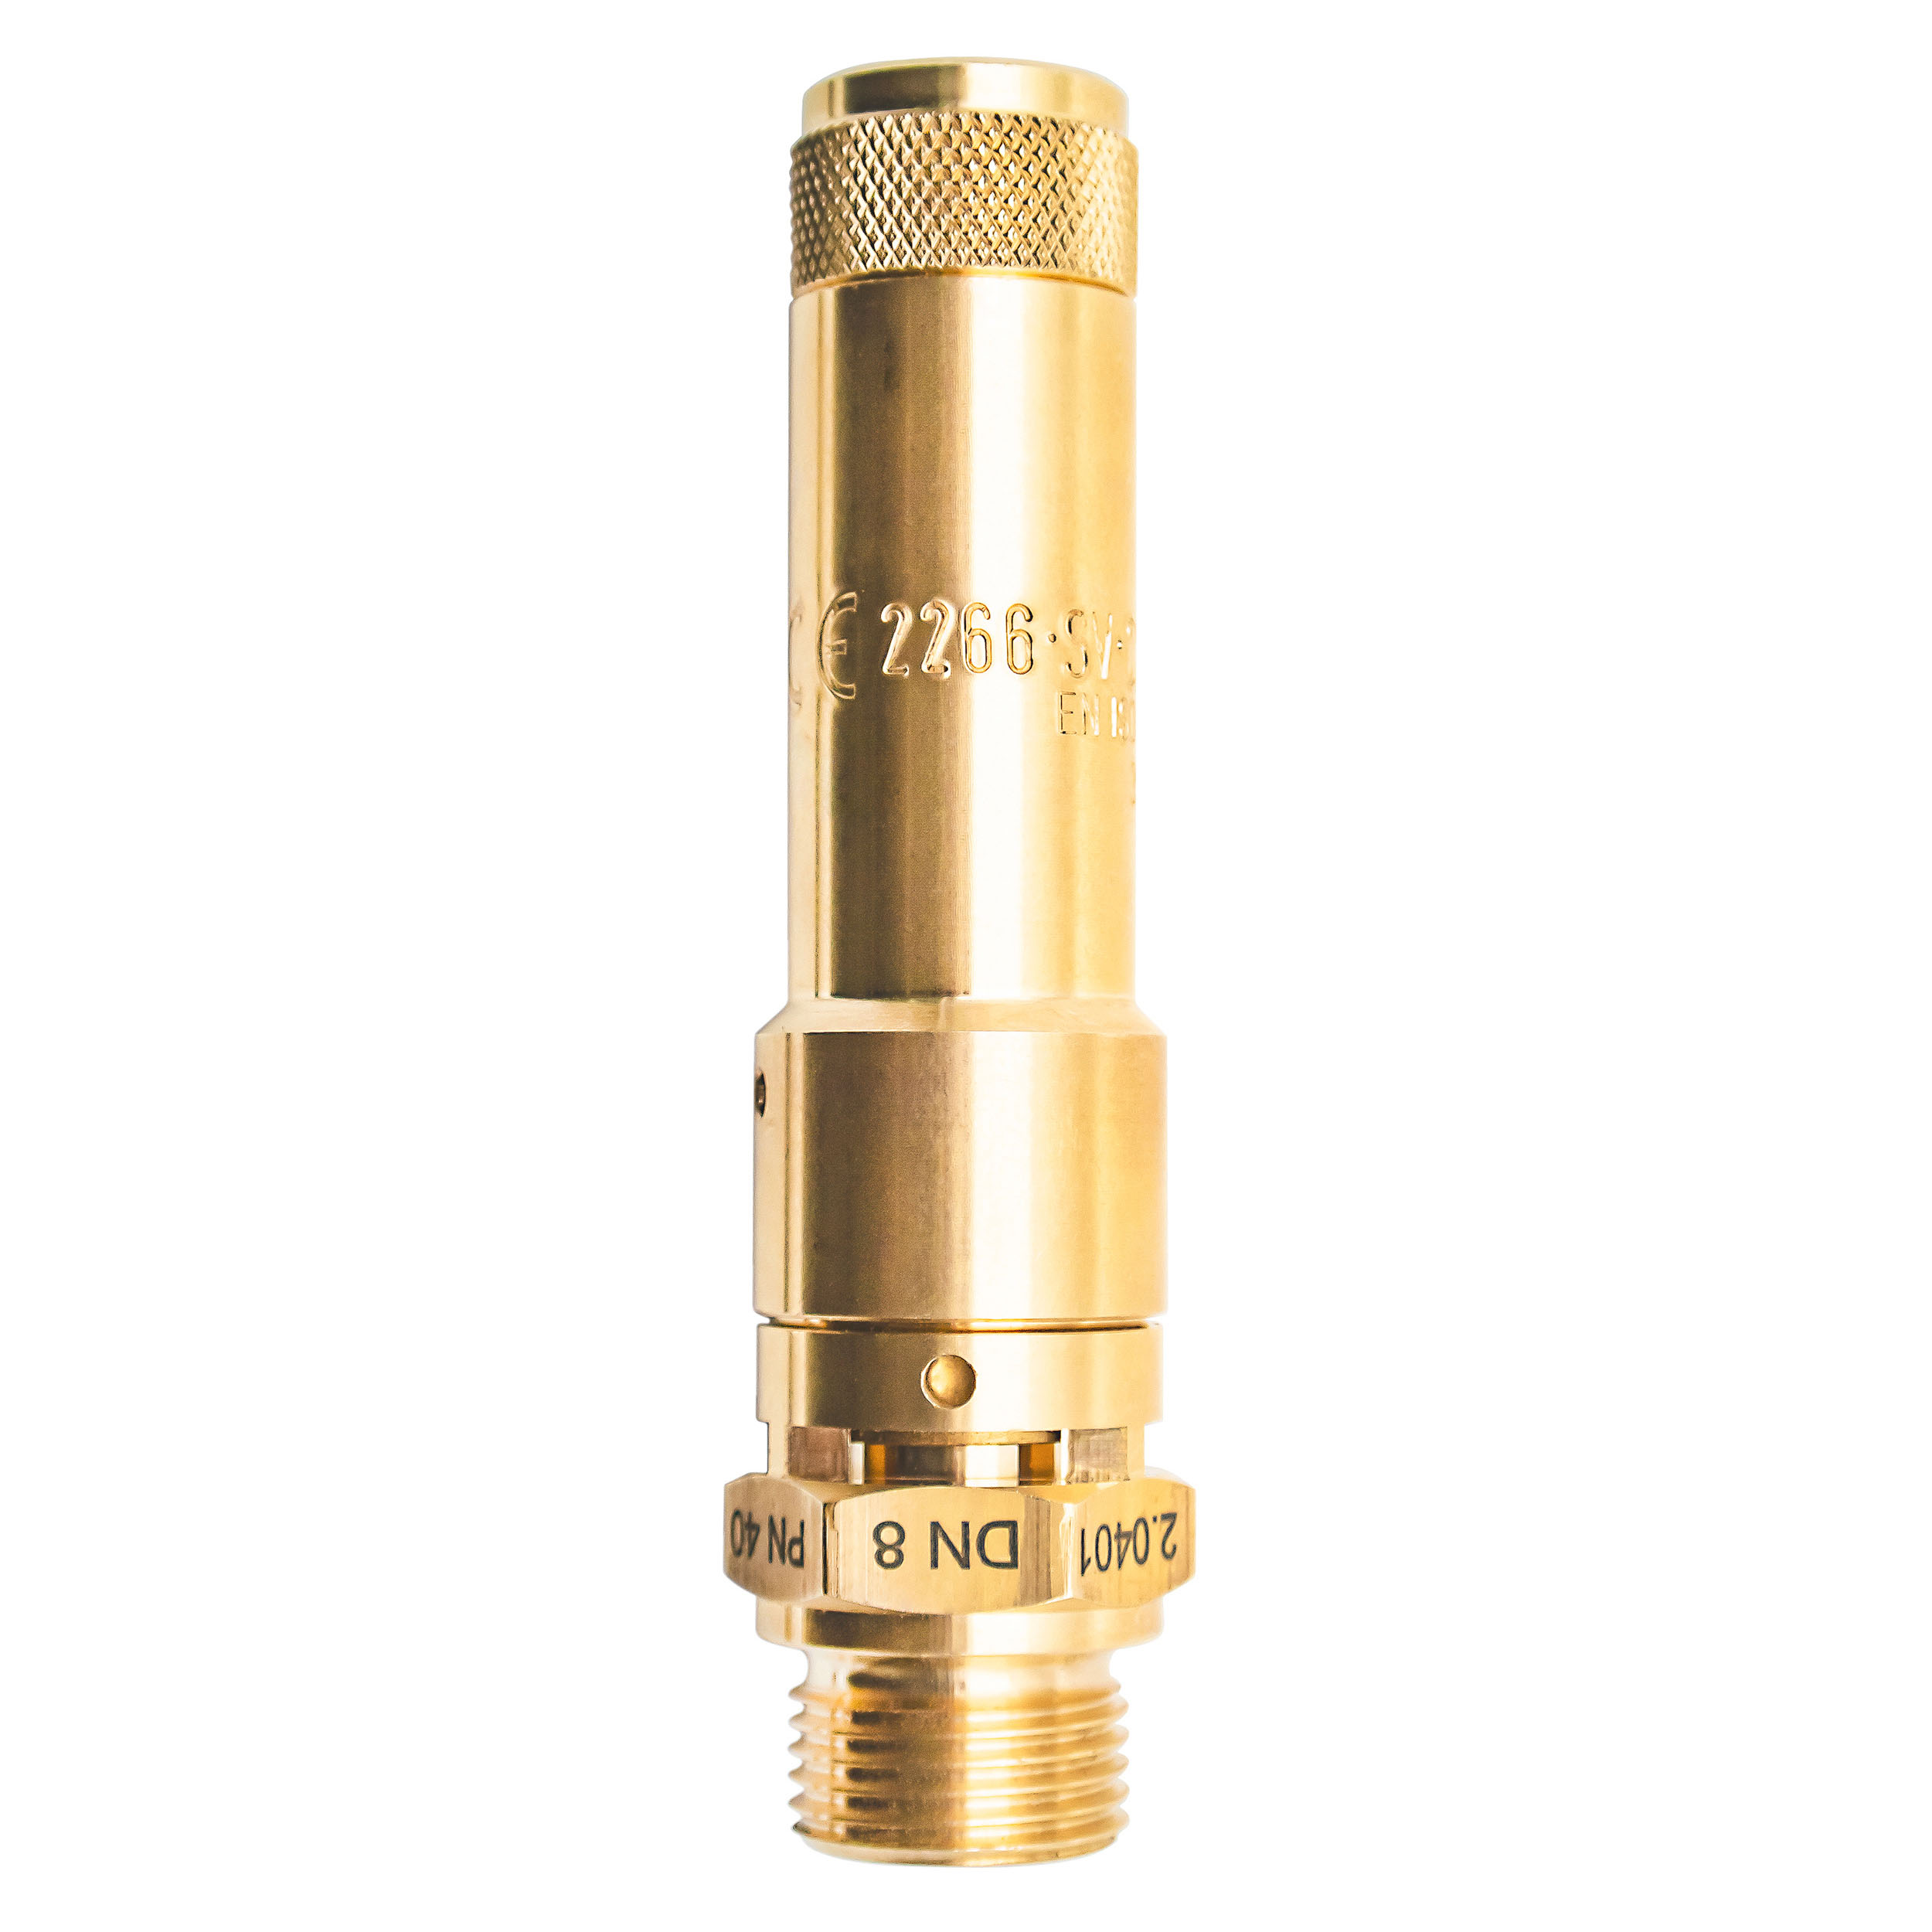 Component-tested safety valve DN 8, G½, pressure: 2.1-3 bar